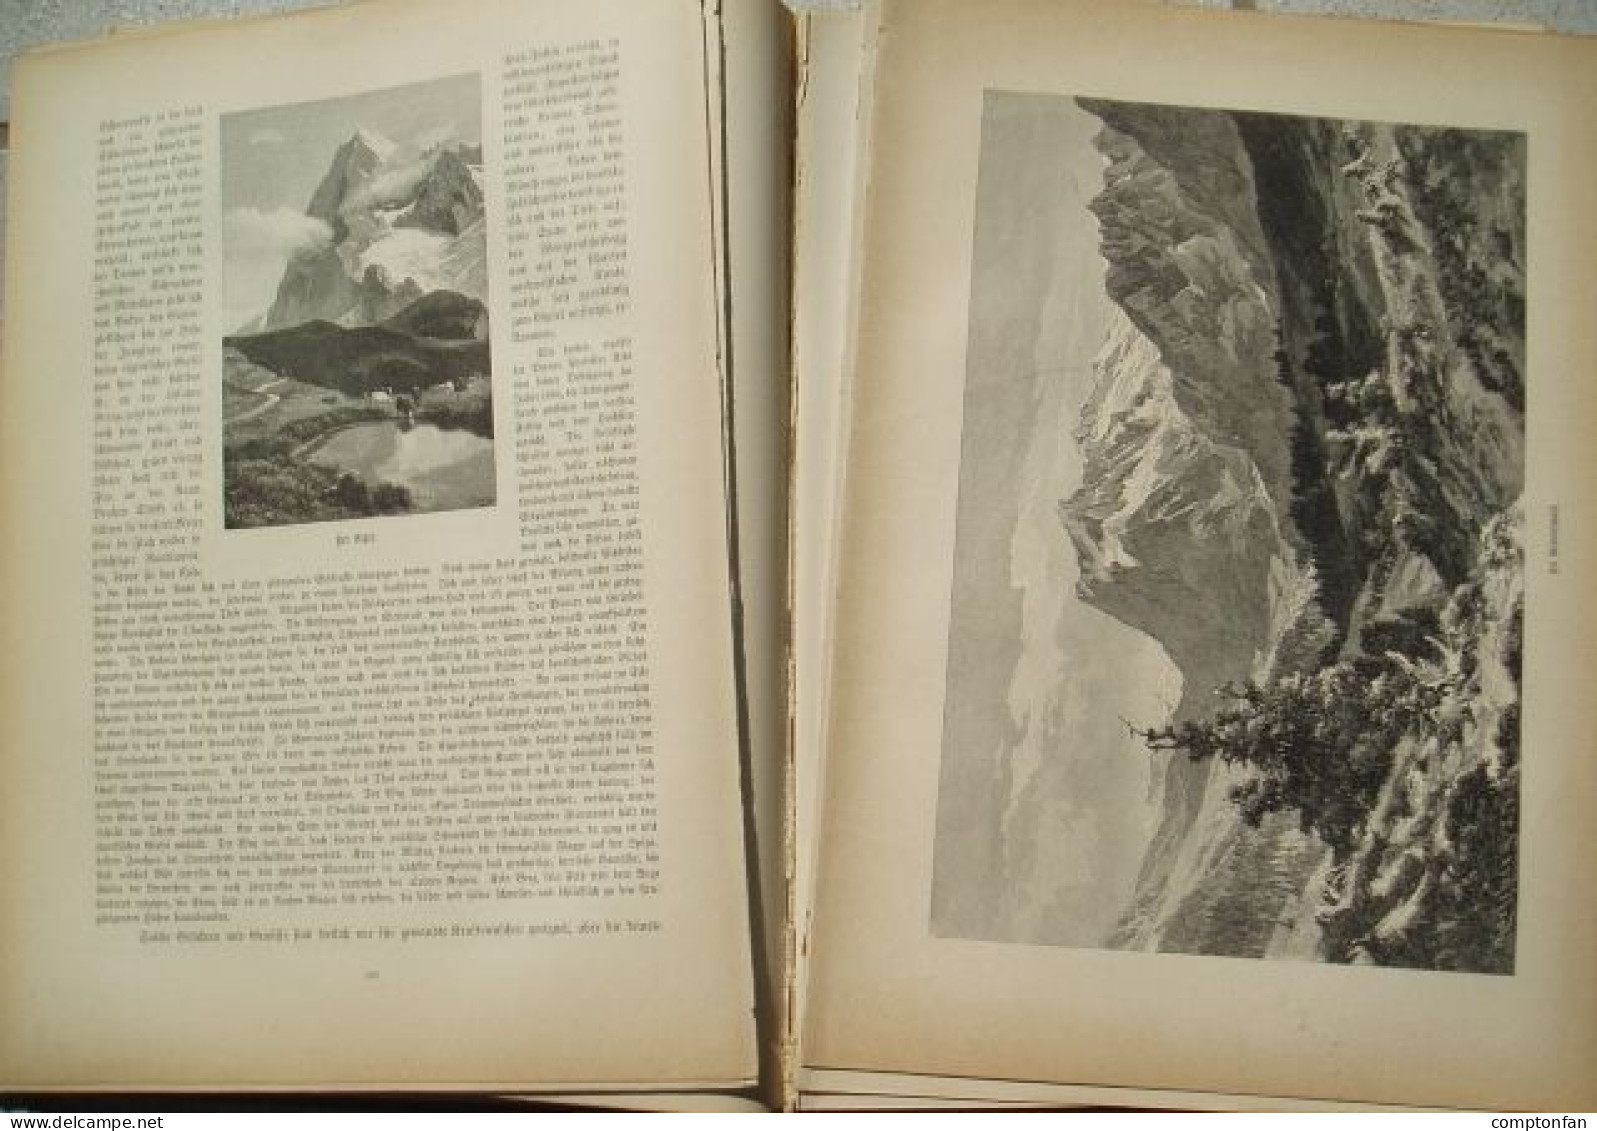 B100 880 Gsell-Fels Die Schweiz Compton Prachtband Rarität 1883 !! - Old Books